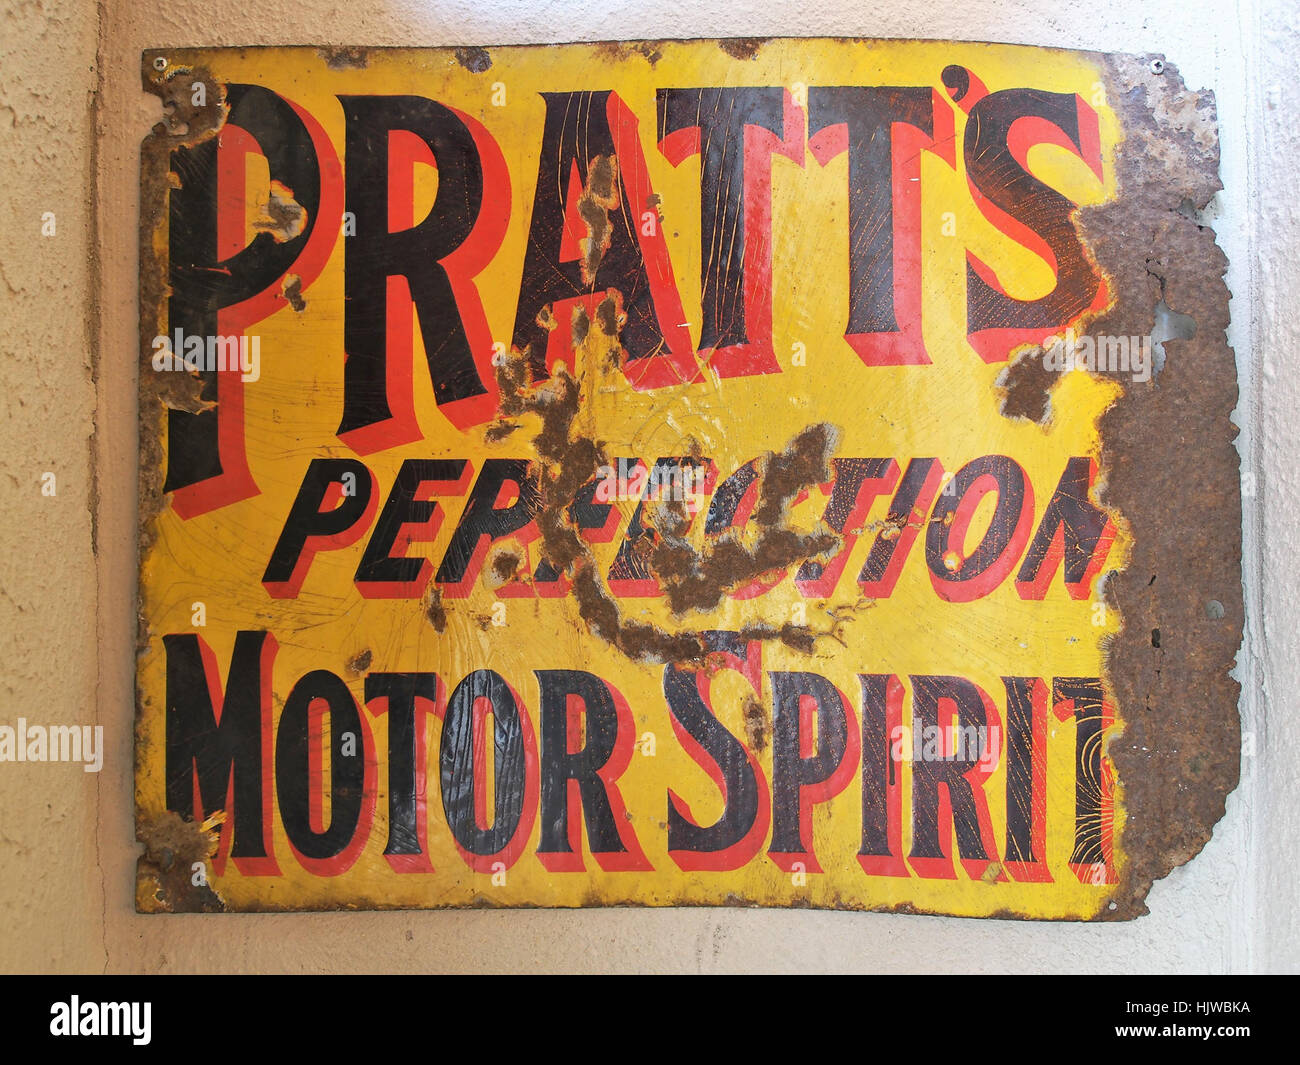 Pratts Motor Spirit Druckguss Schild Aluminium Öl Anzeige Werbung Benzin VAC017 